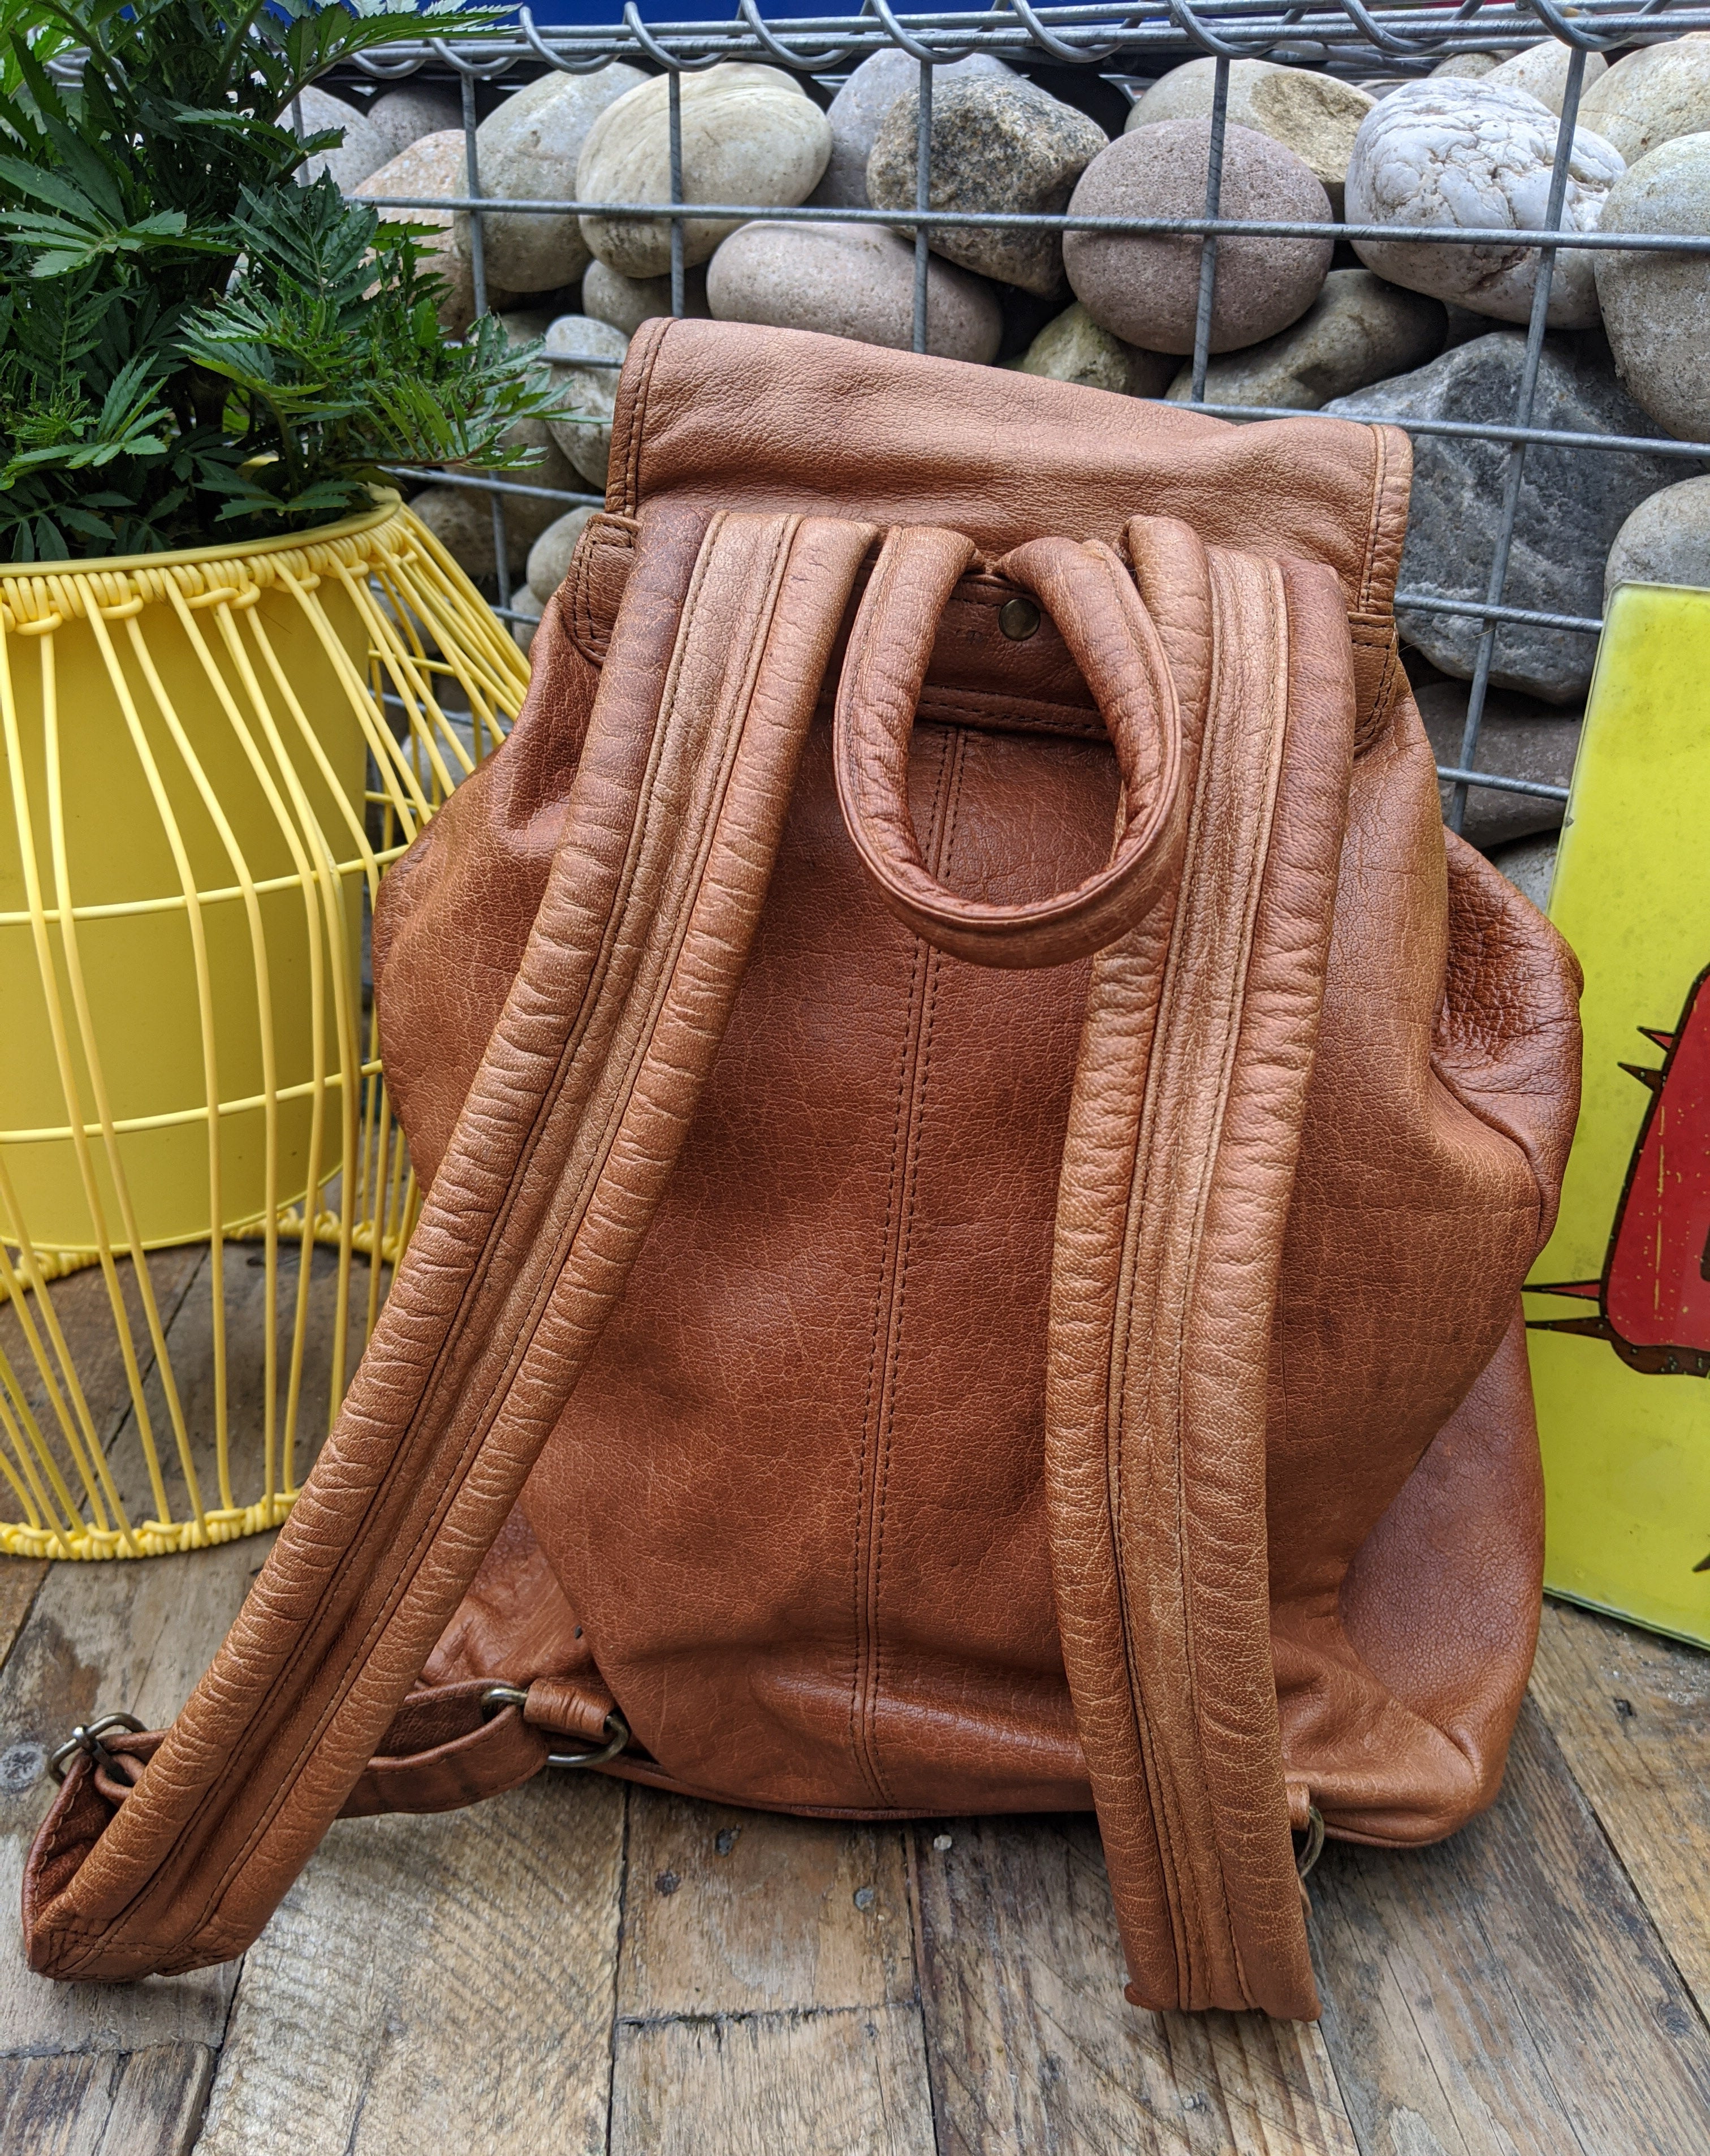 Vintage large brown leather backpack